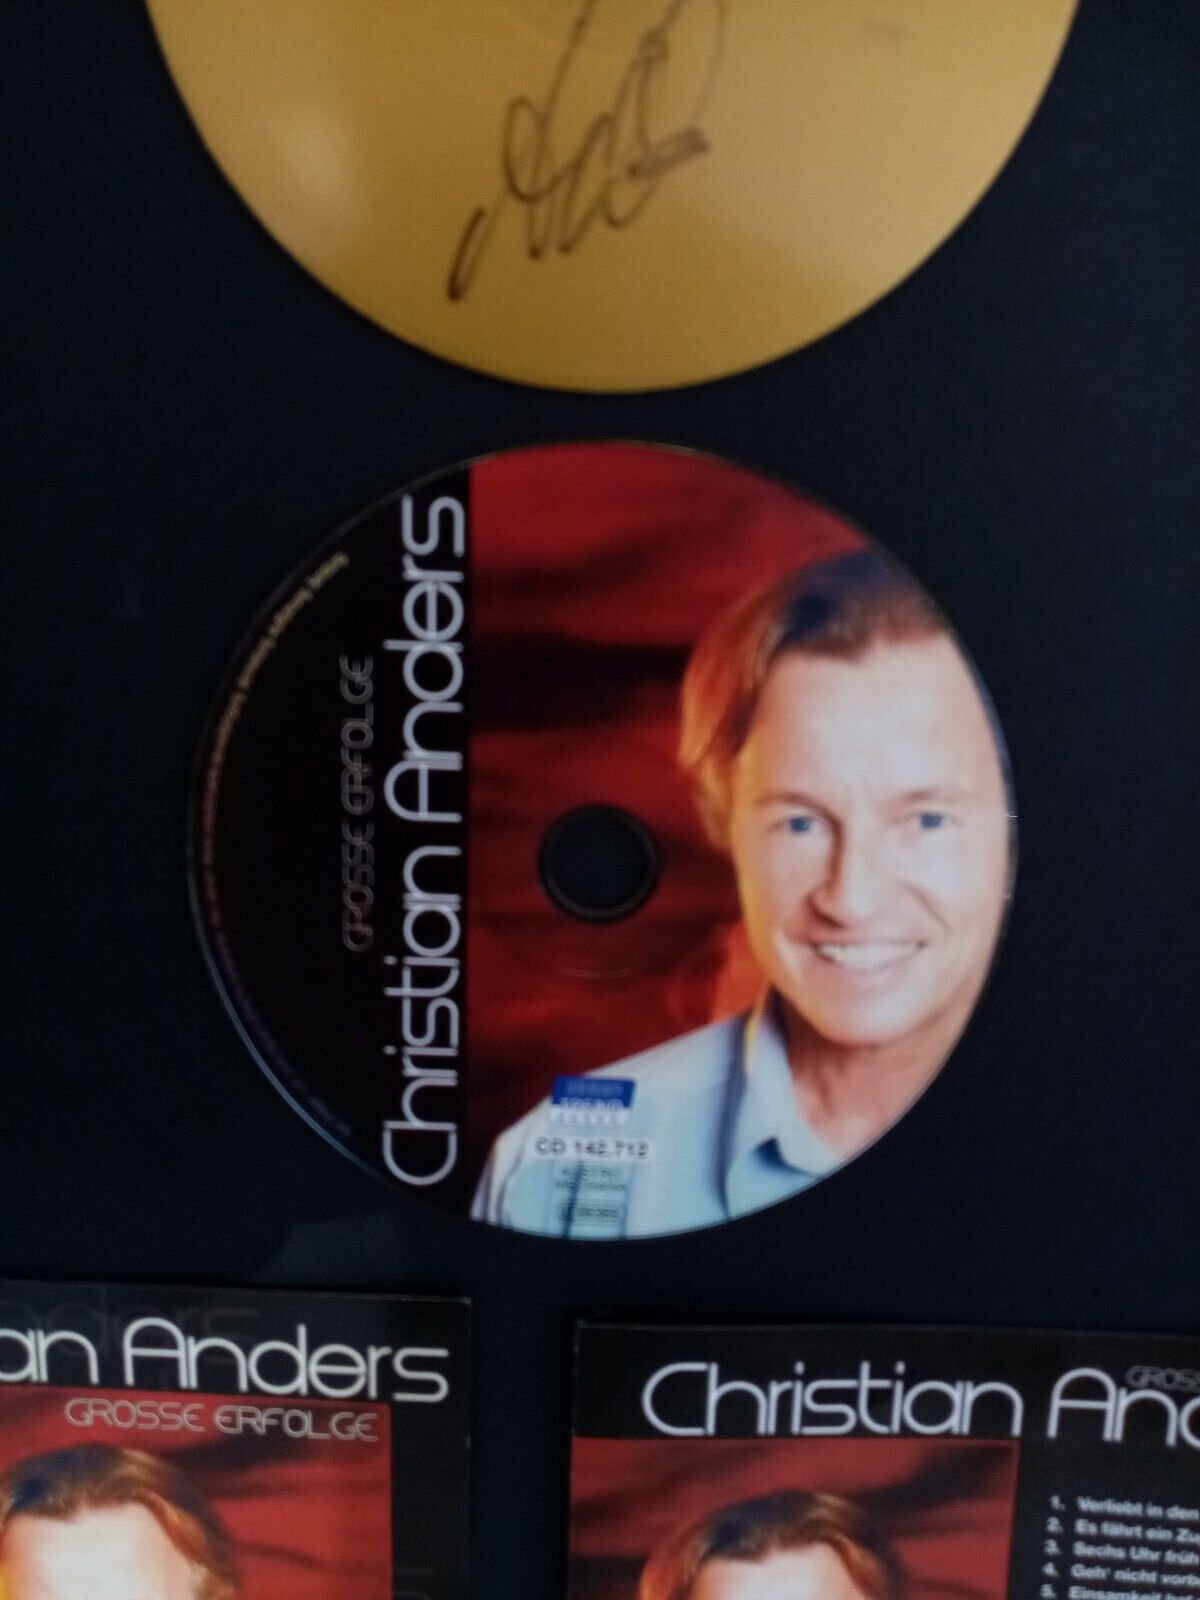 CD / Rohling Christian Anders signiert mit Album im Rahmen Autogramm Neu Musik